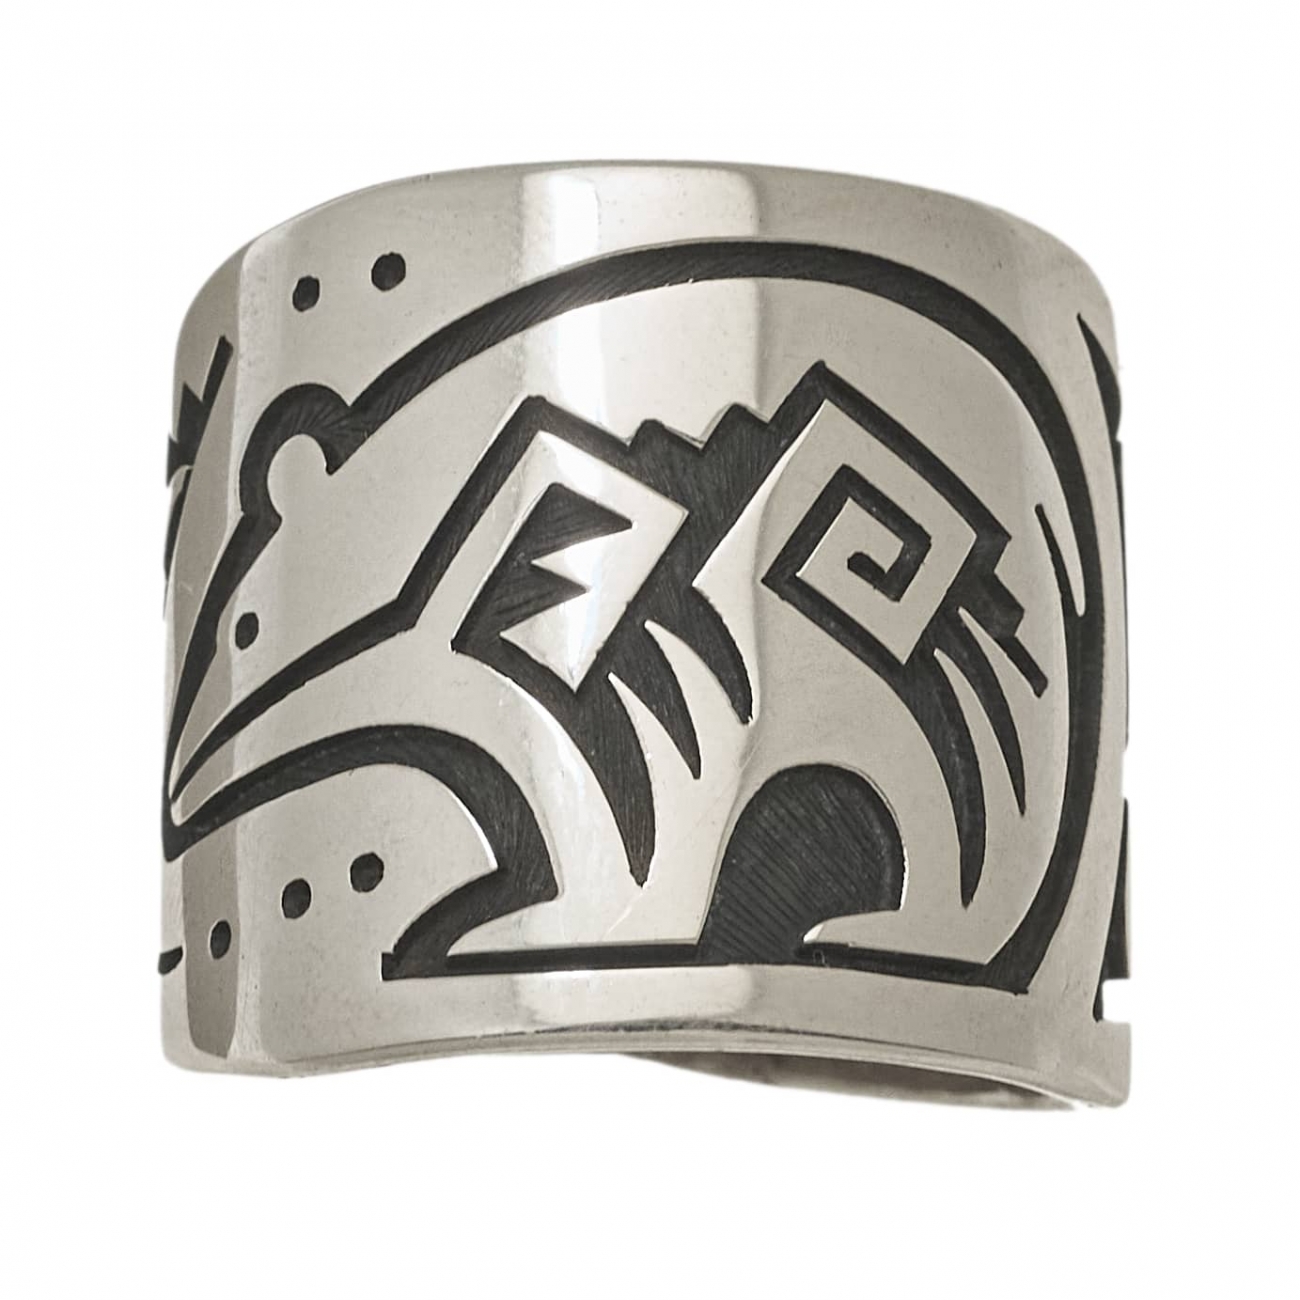 Hopi ring in sterling silver for men BA1315, bear and petroglyphs